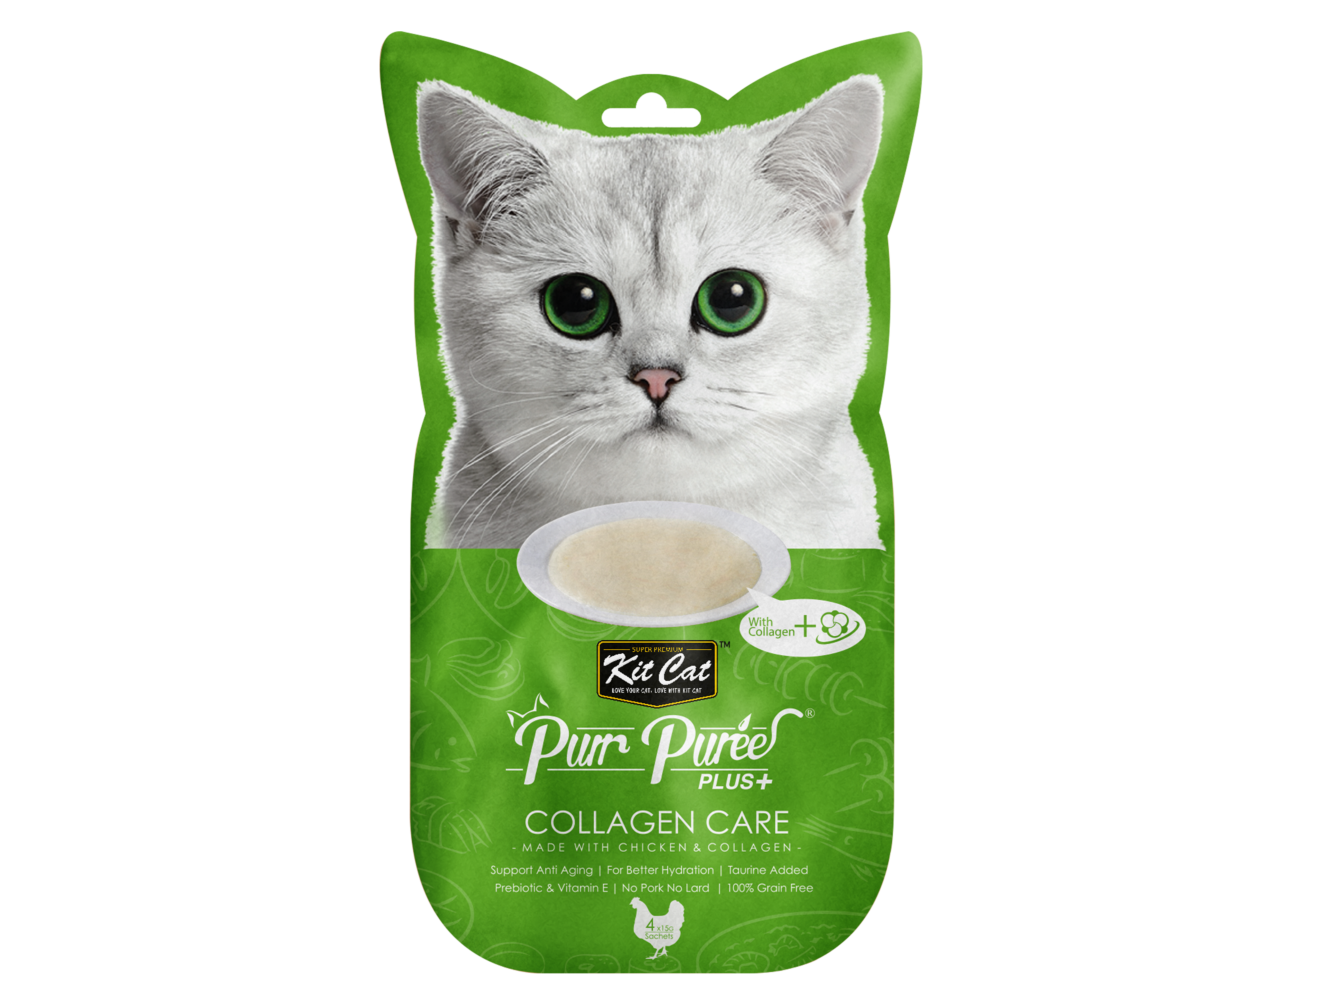 Kit Cat Purr Puree Plus+ Collagen Care 4x15g (Chicken)